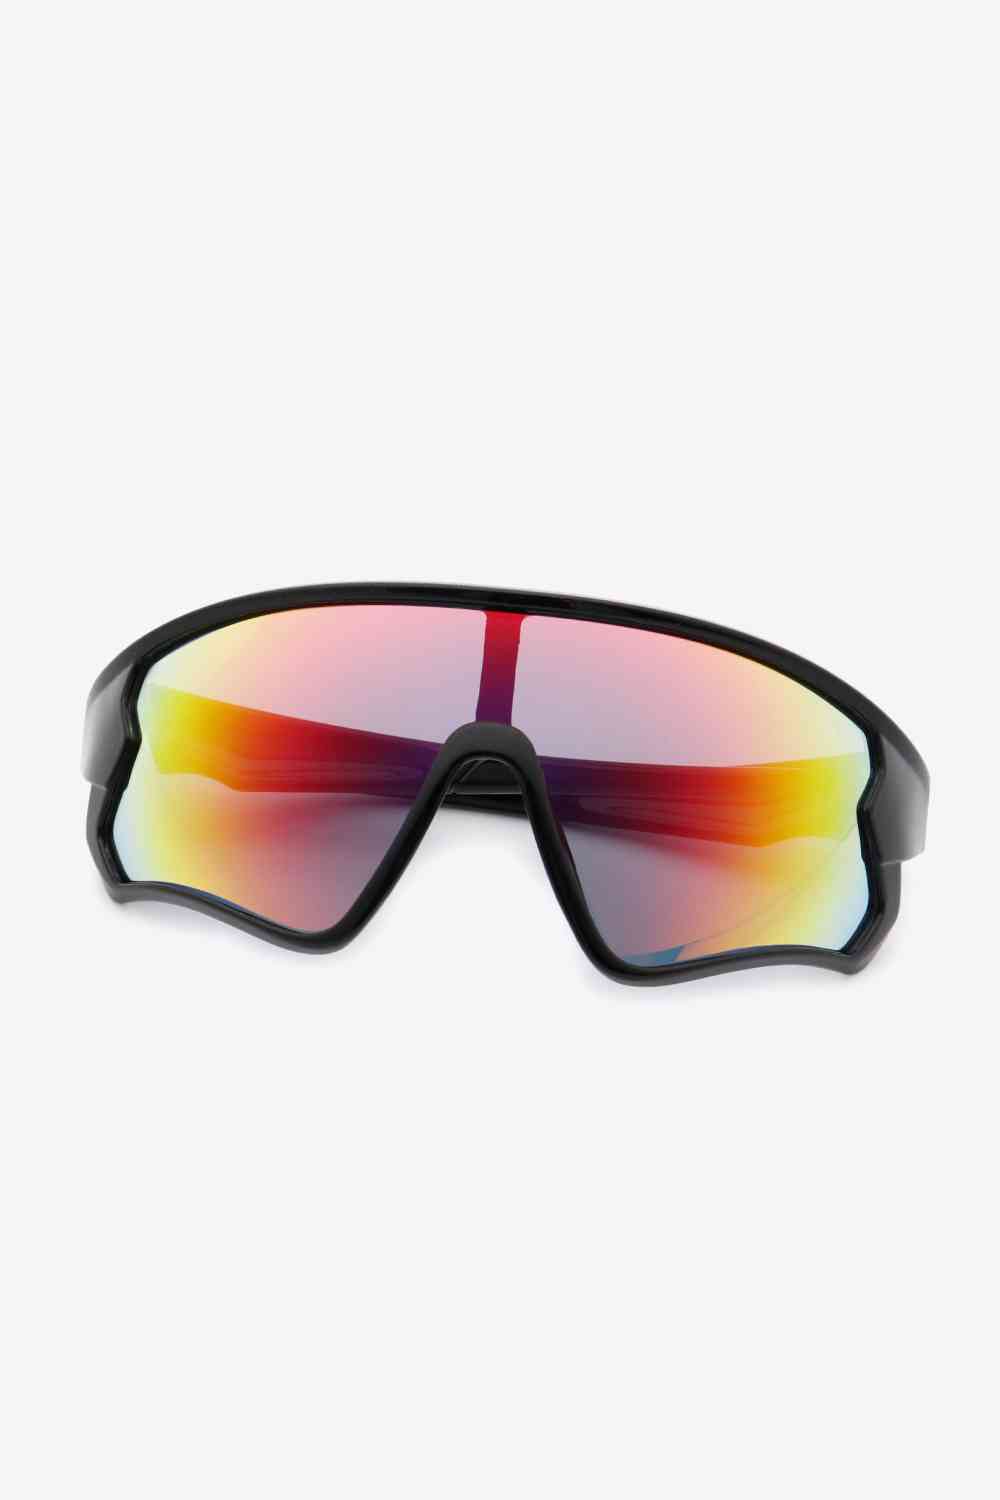 TEEK - Shade Shield Sunglasses EYEGLASSES TEEK Trend   